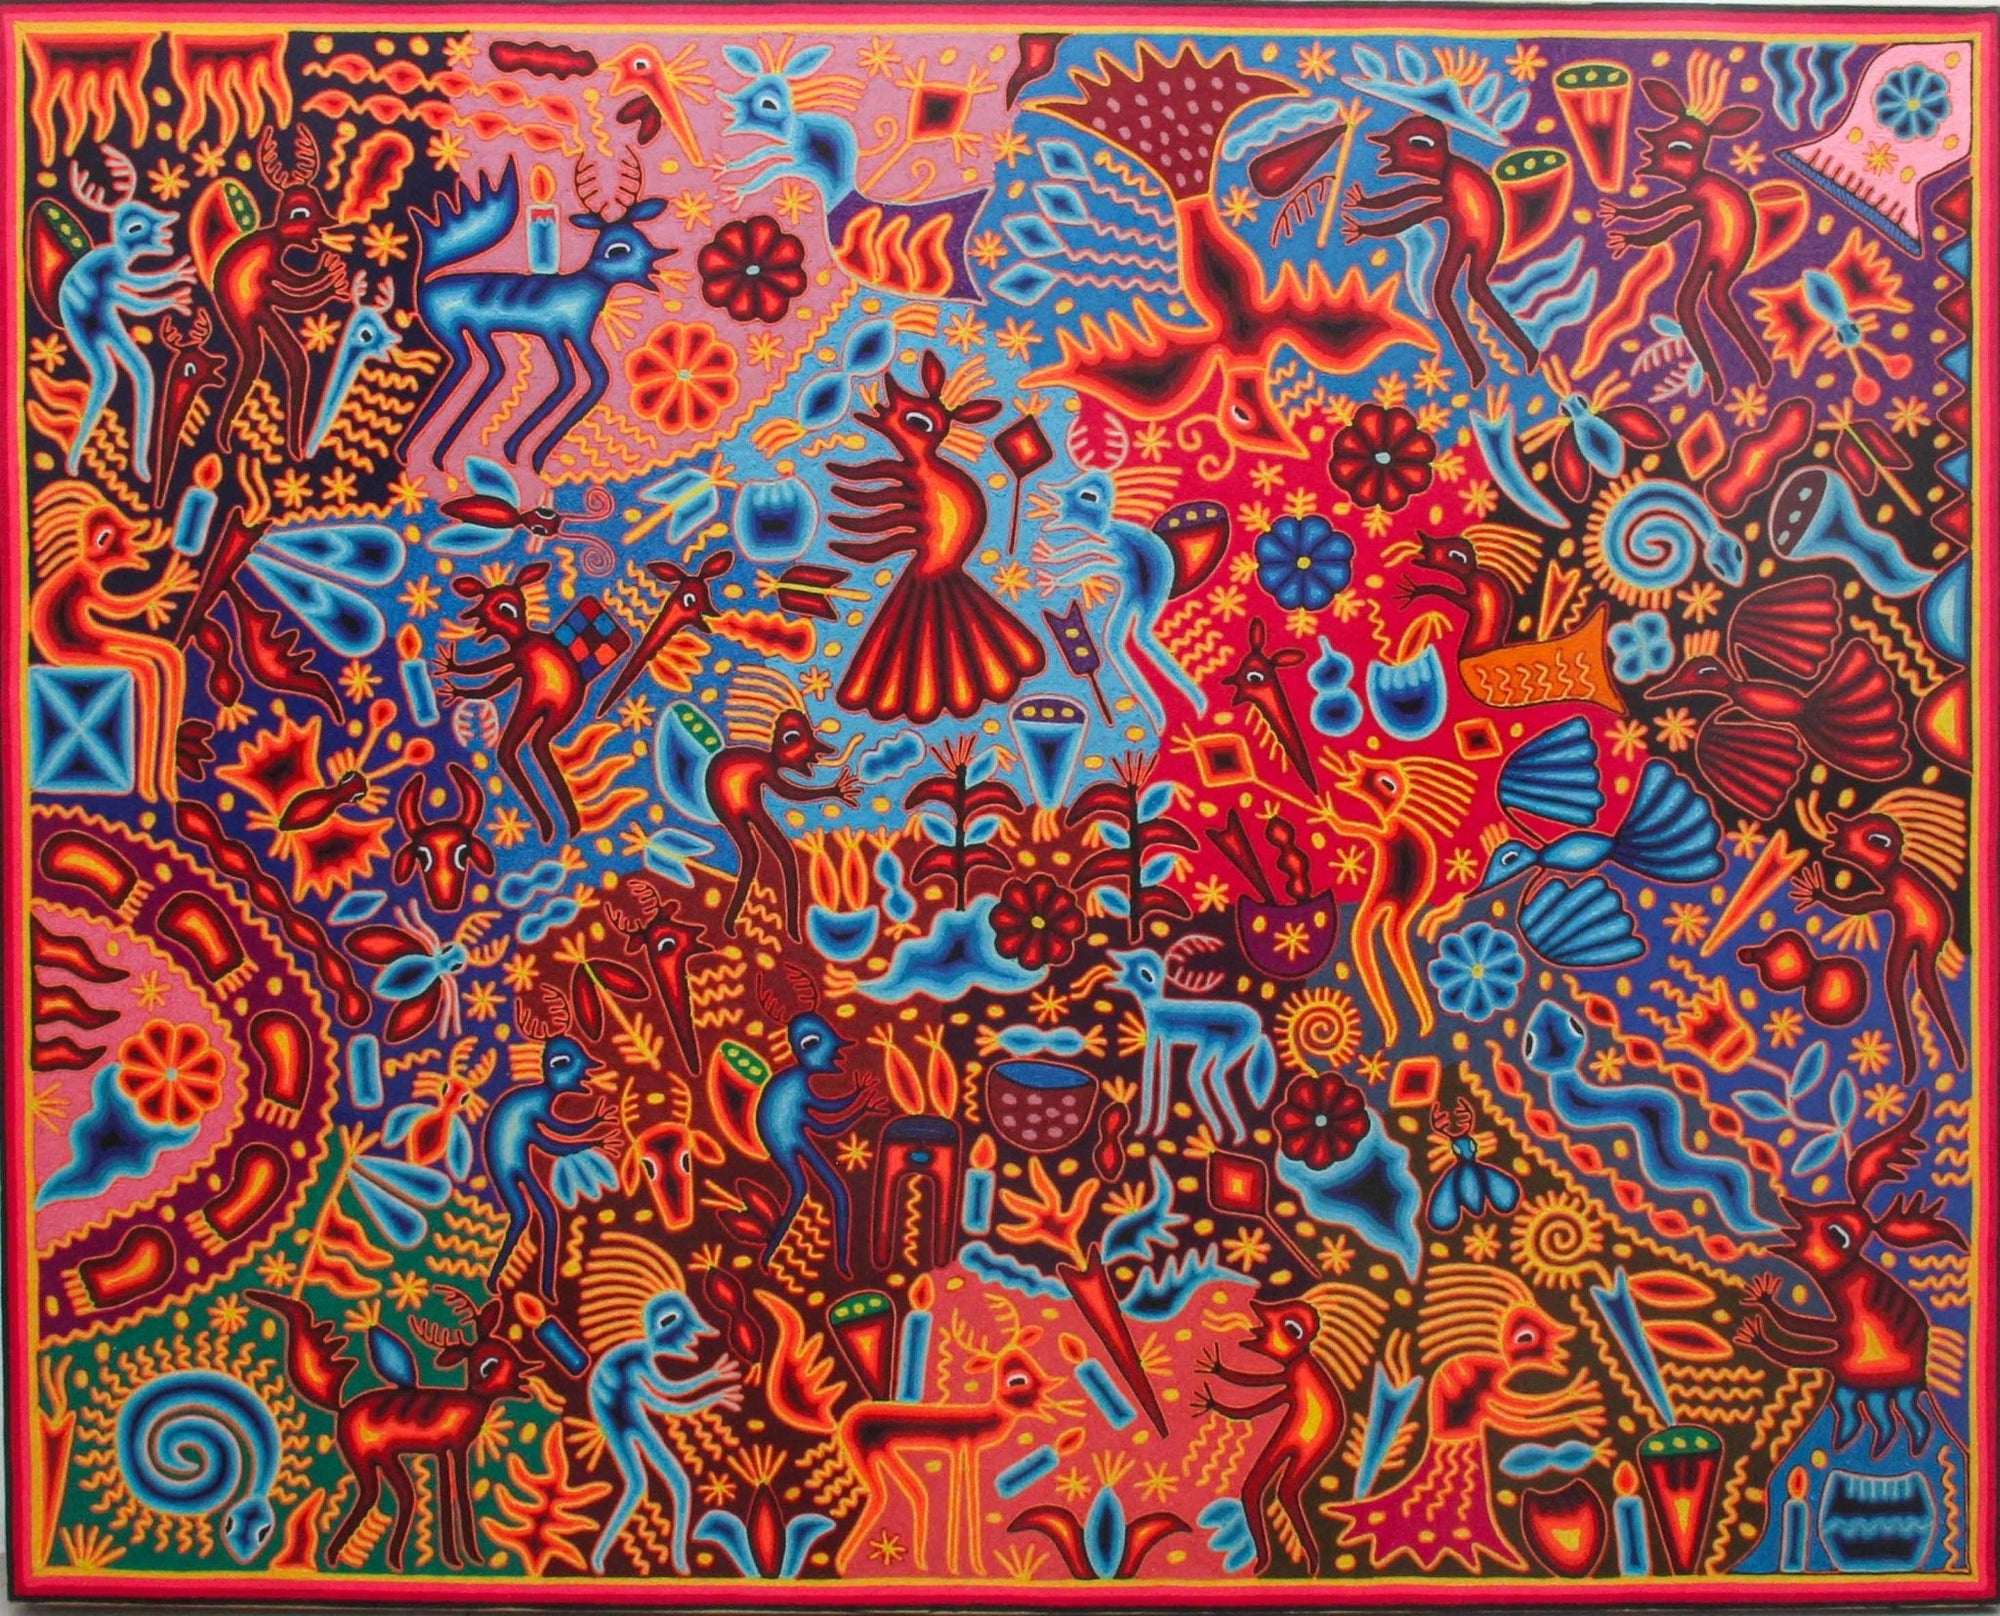 Nierika de Estambre Cuadro Huichol - Tura hirie - 150 x 120 cm. - Arte Huichol - Marakame